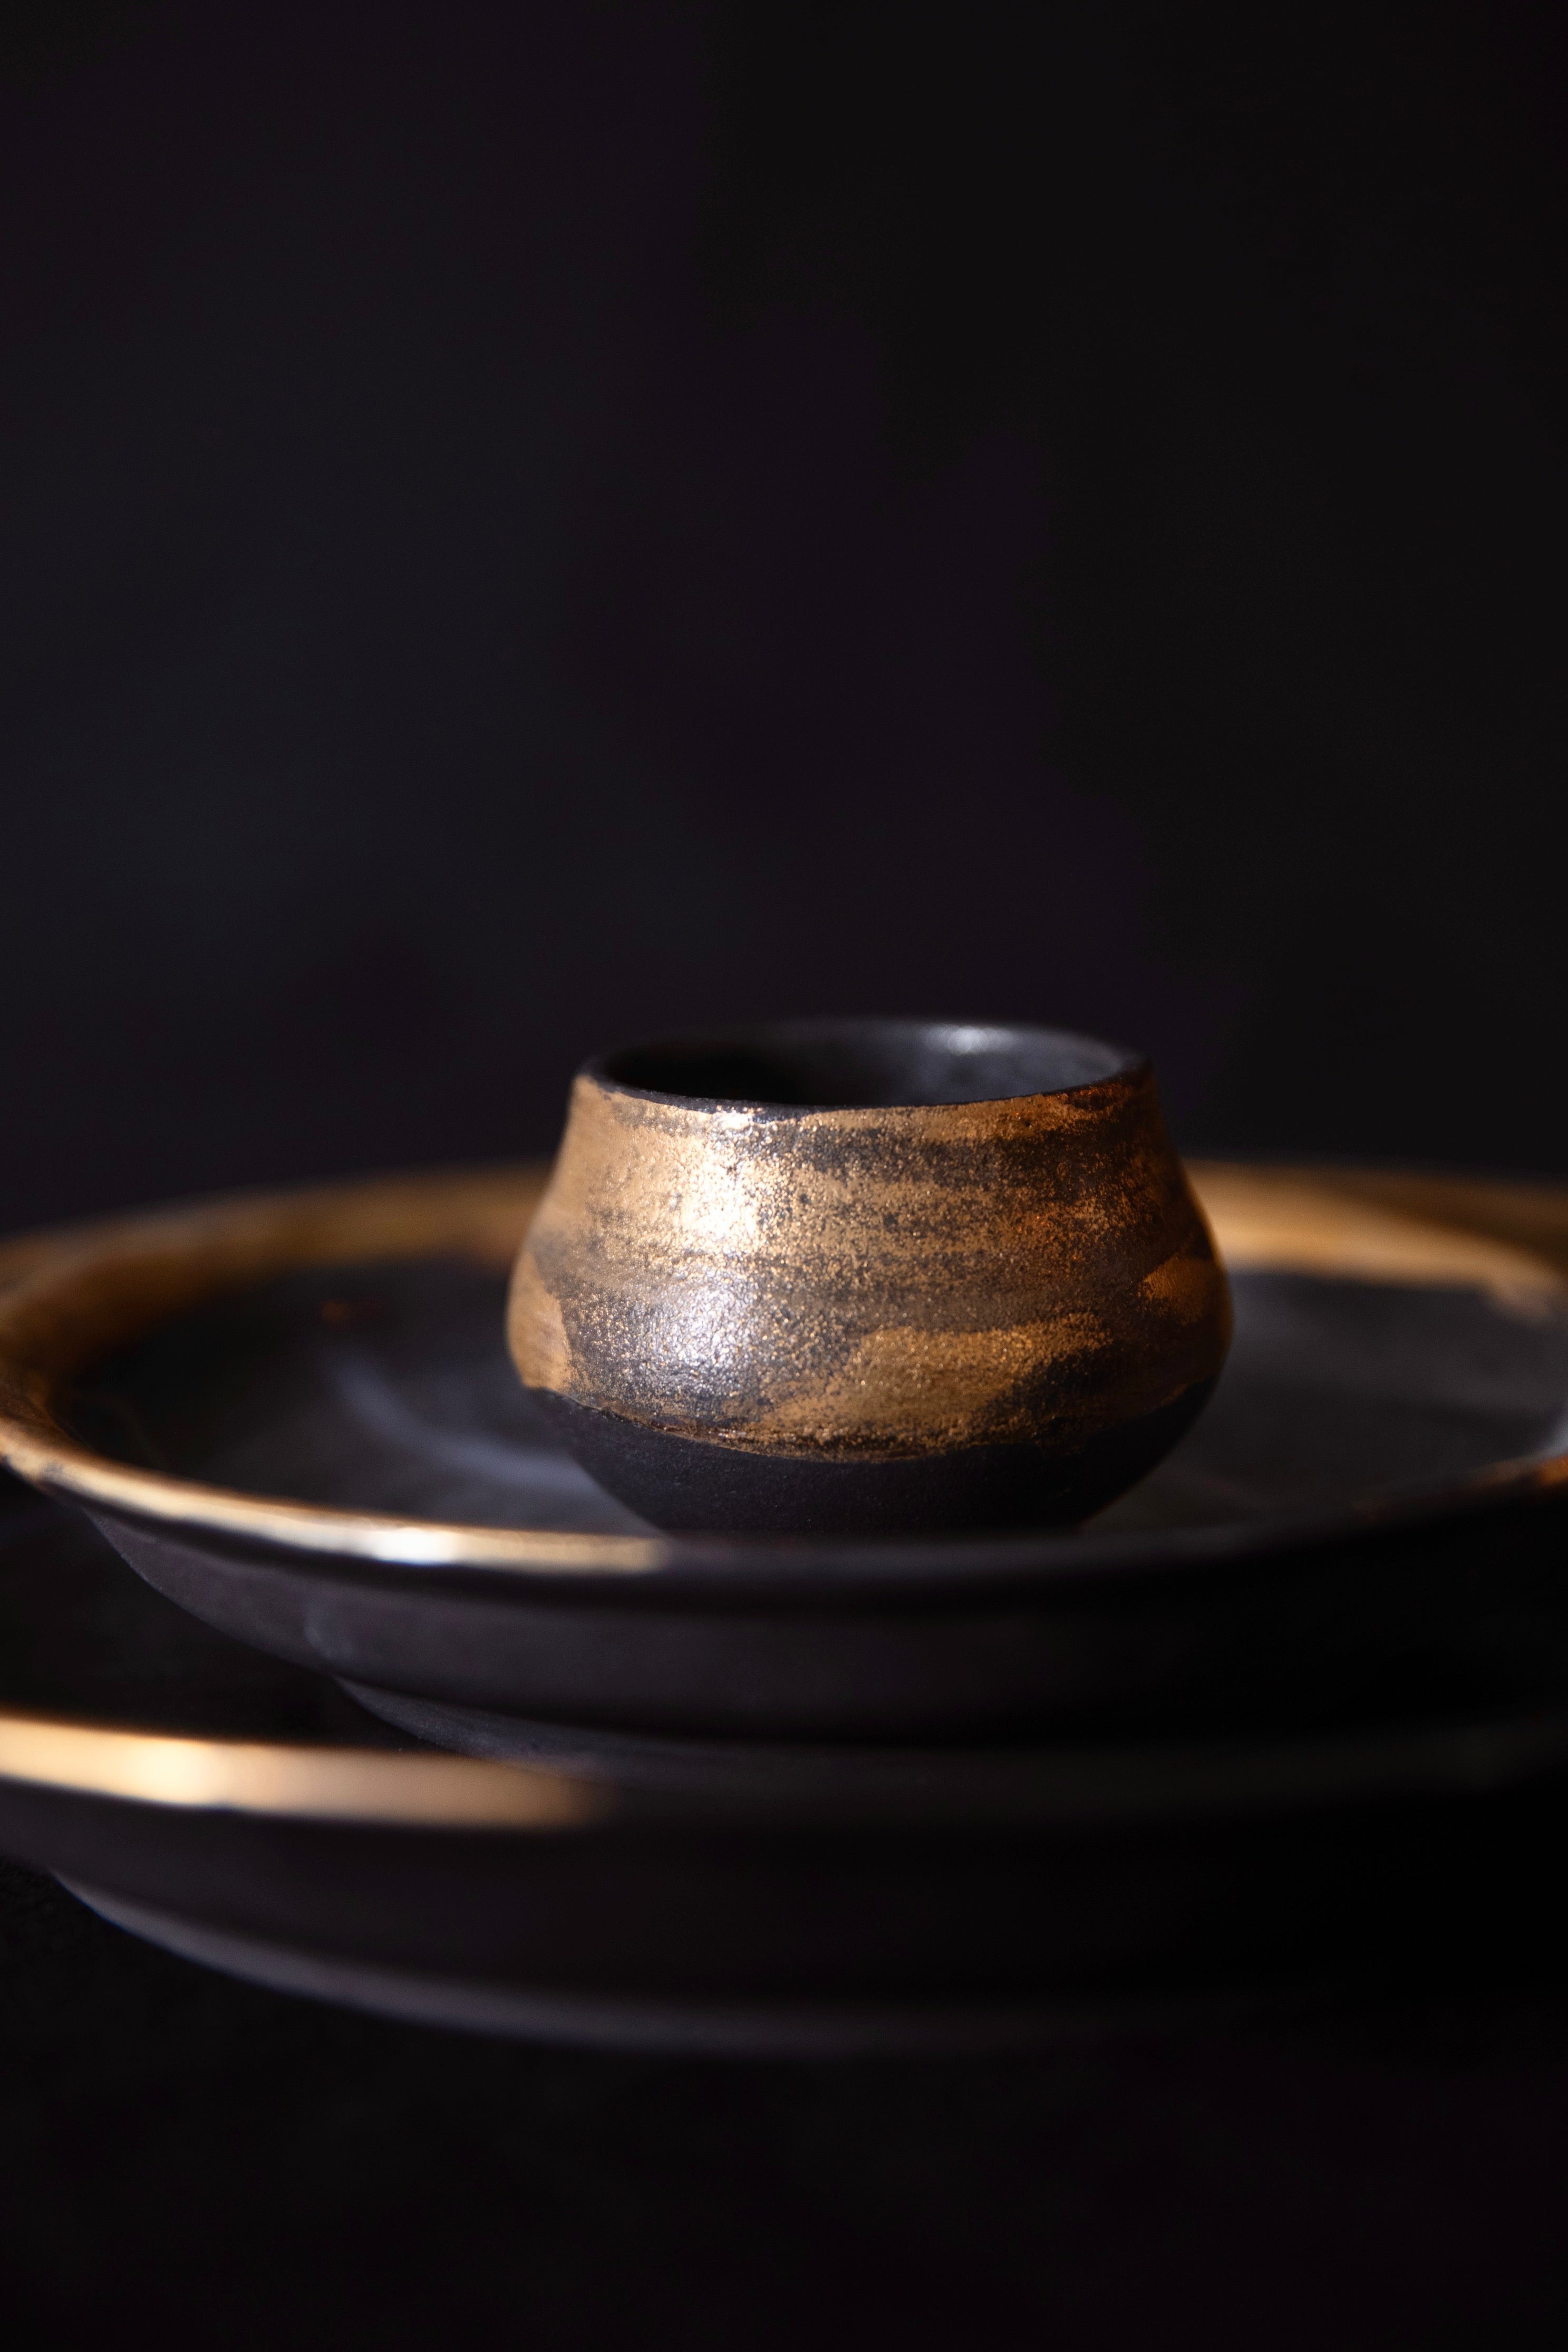 Black Ceramic Dinner Set  | Table Wear Set | Ceramic Plates | Gold Cup | Handmade Ceramic Set | Set of 3 Pieces | Handcrafted Dinner Set